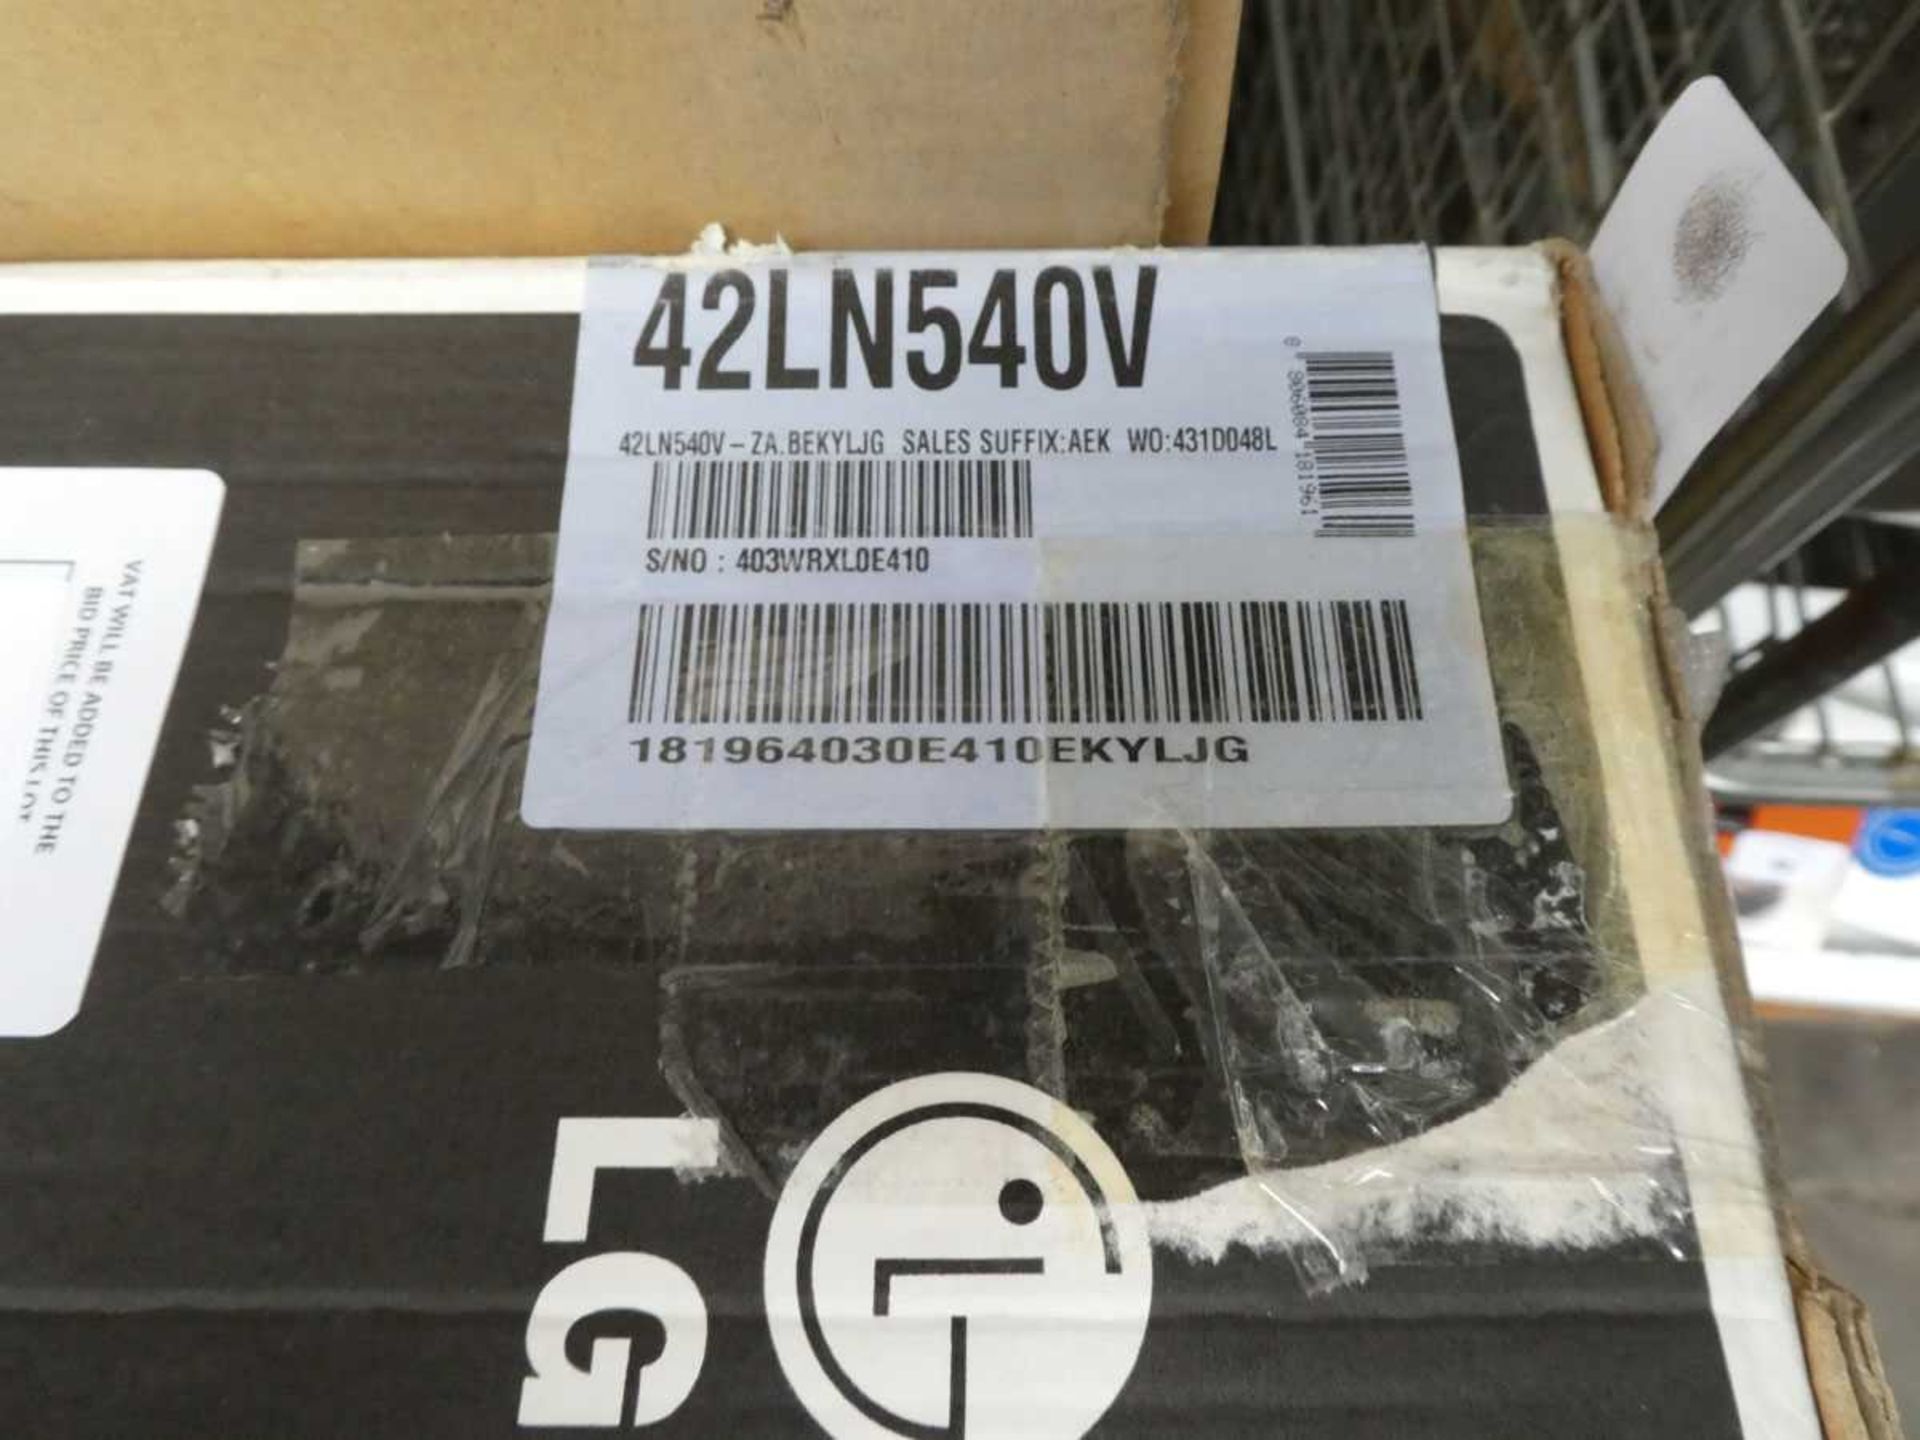 +VAT LG 42" LED TV with box, 42LN540V - Image 2 of 2